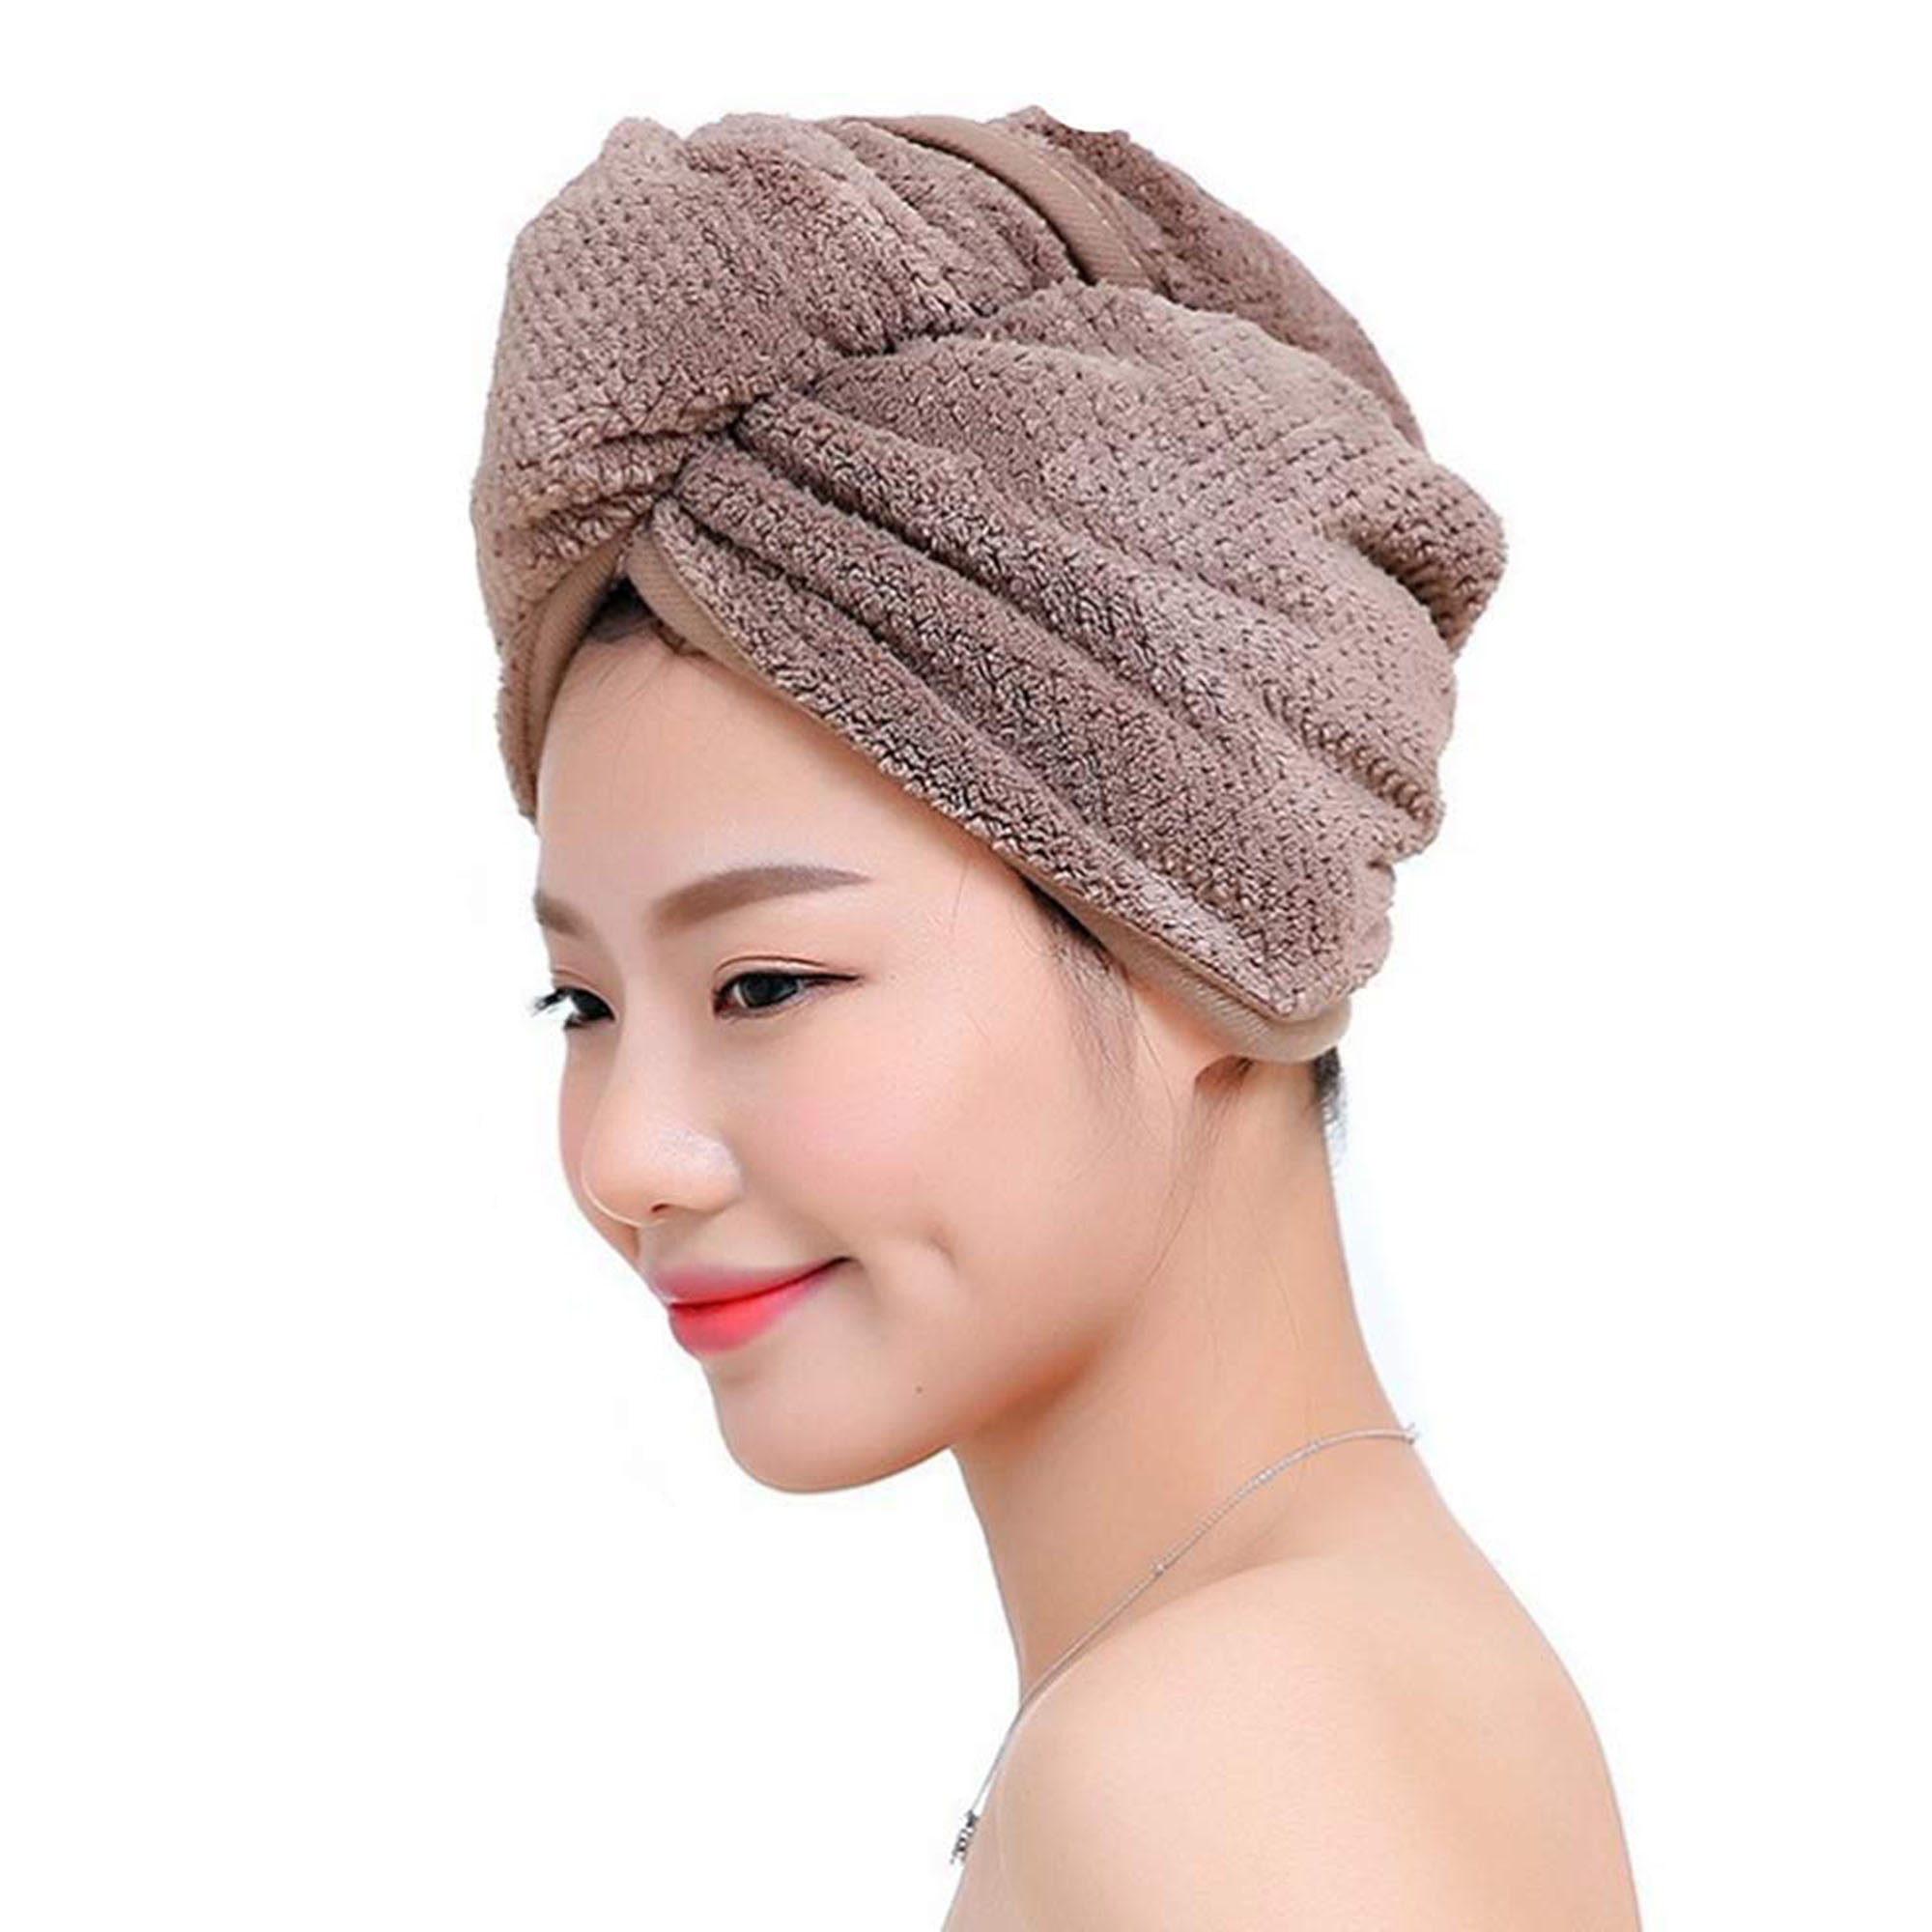 Soft Coral Fleece Quick Dry Towel Turban Twist Hair Head Wrap Loop Hat Bath Cap